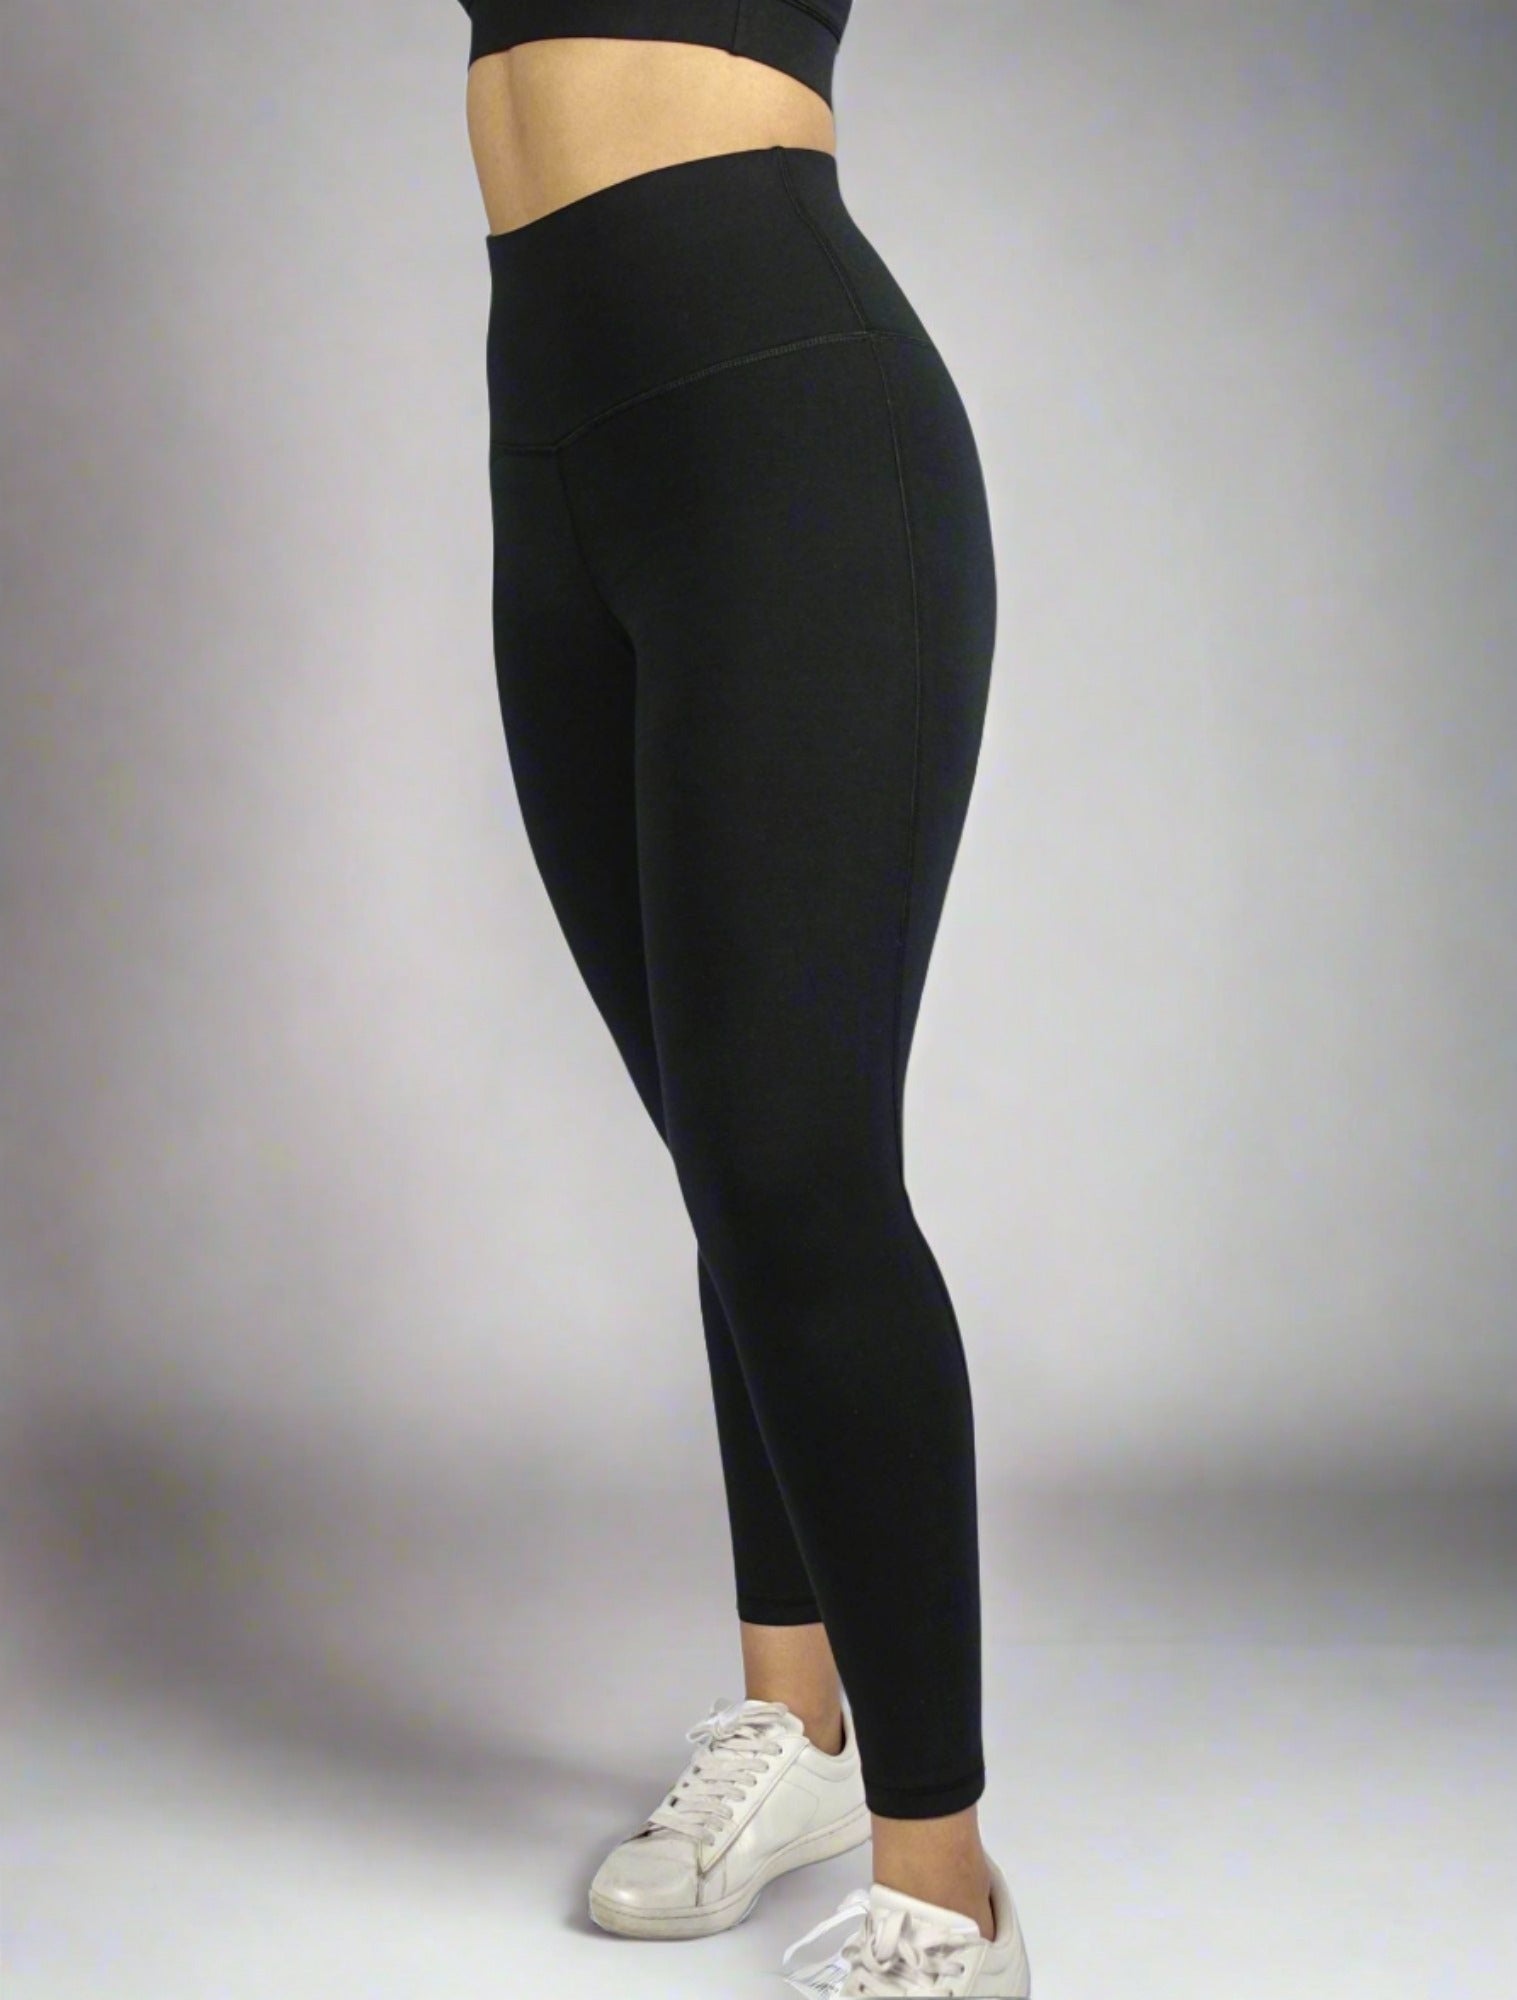 Black Leggings With Pockets for Women, Yoga Pants, 5 High Waist Leggings,  Buttery Soft, One Size, Plus Size, 2XL Leggings, Workout Leggings -   New Zealand